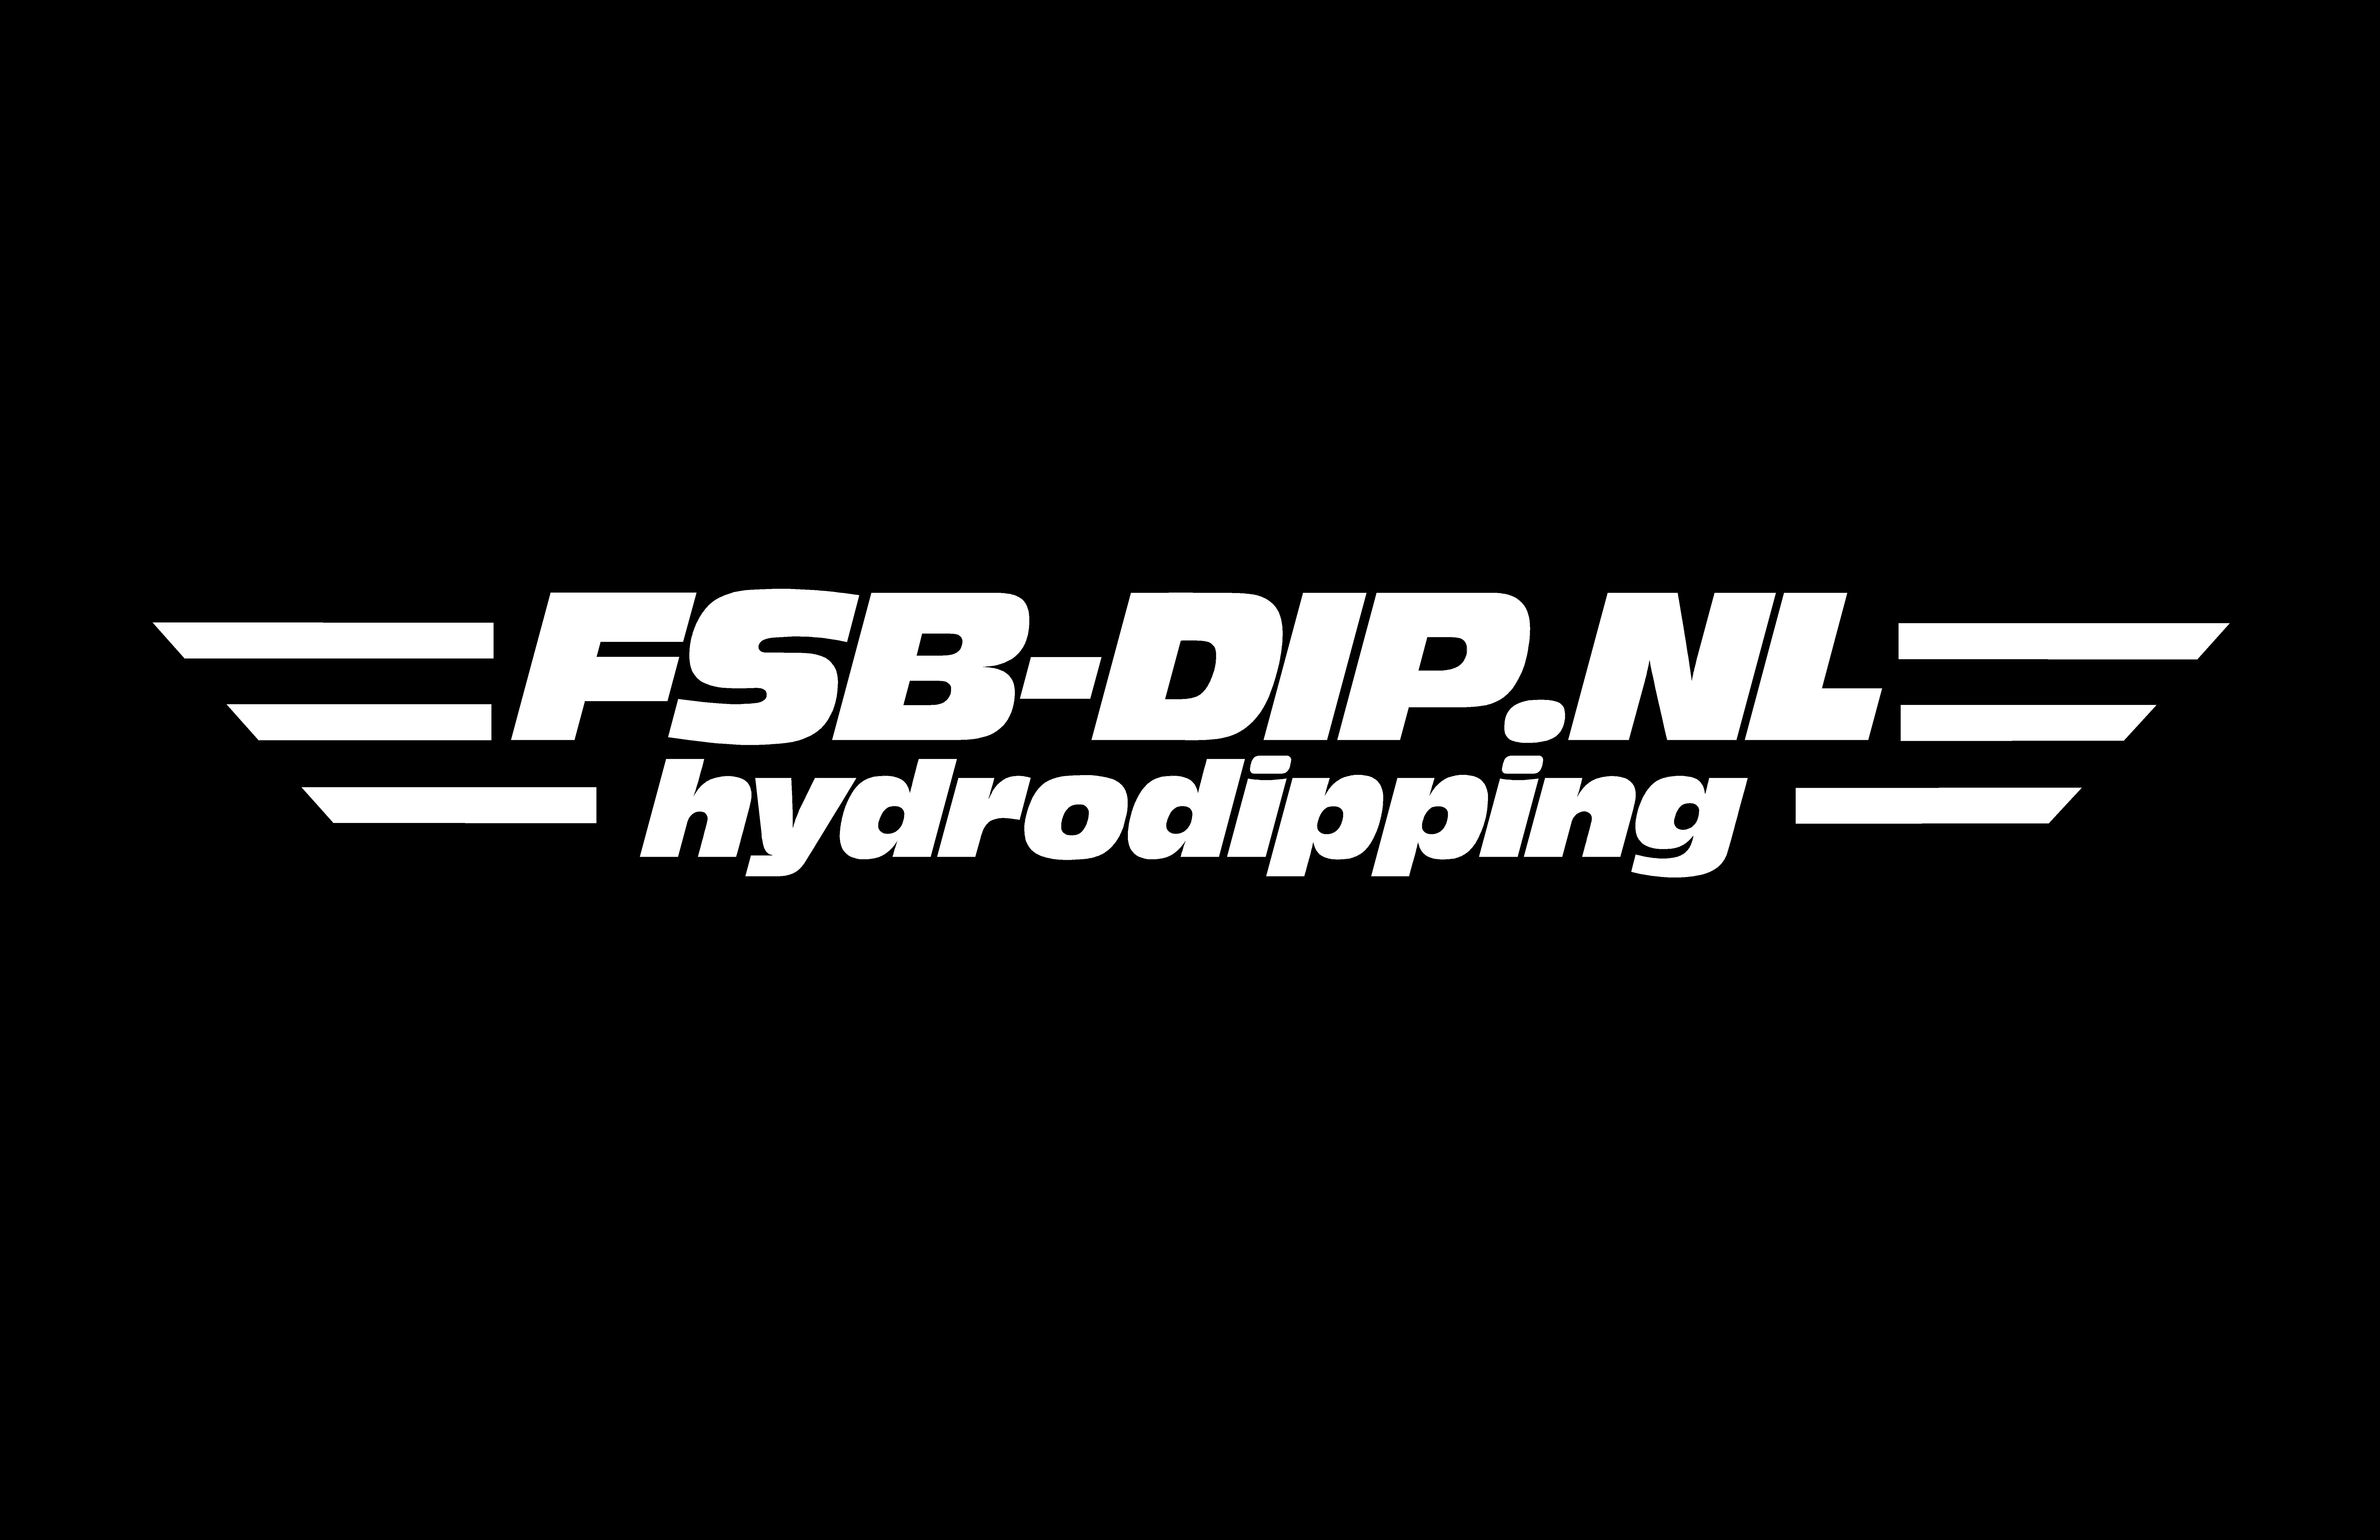 fsb-dip.nl 